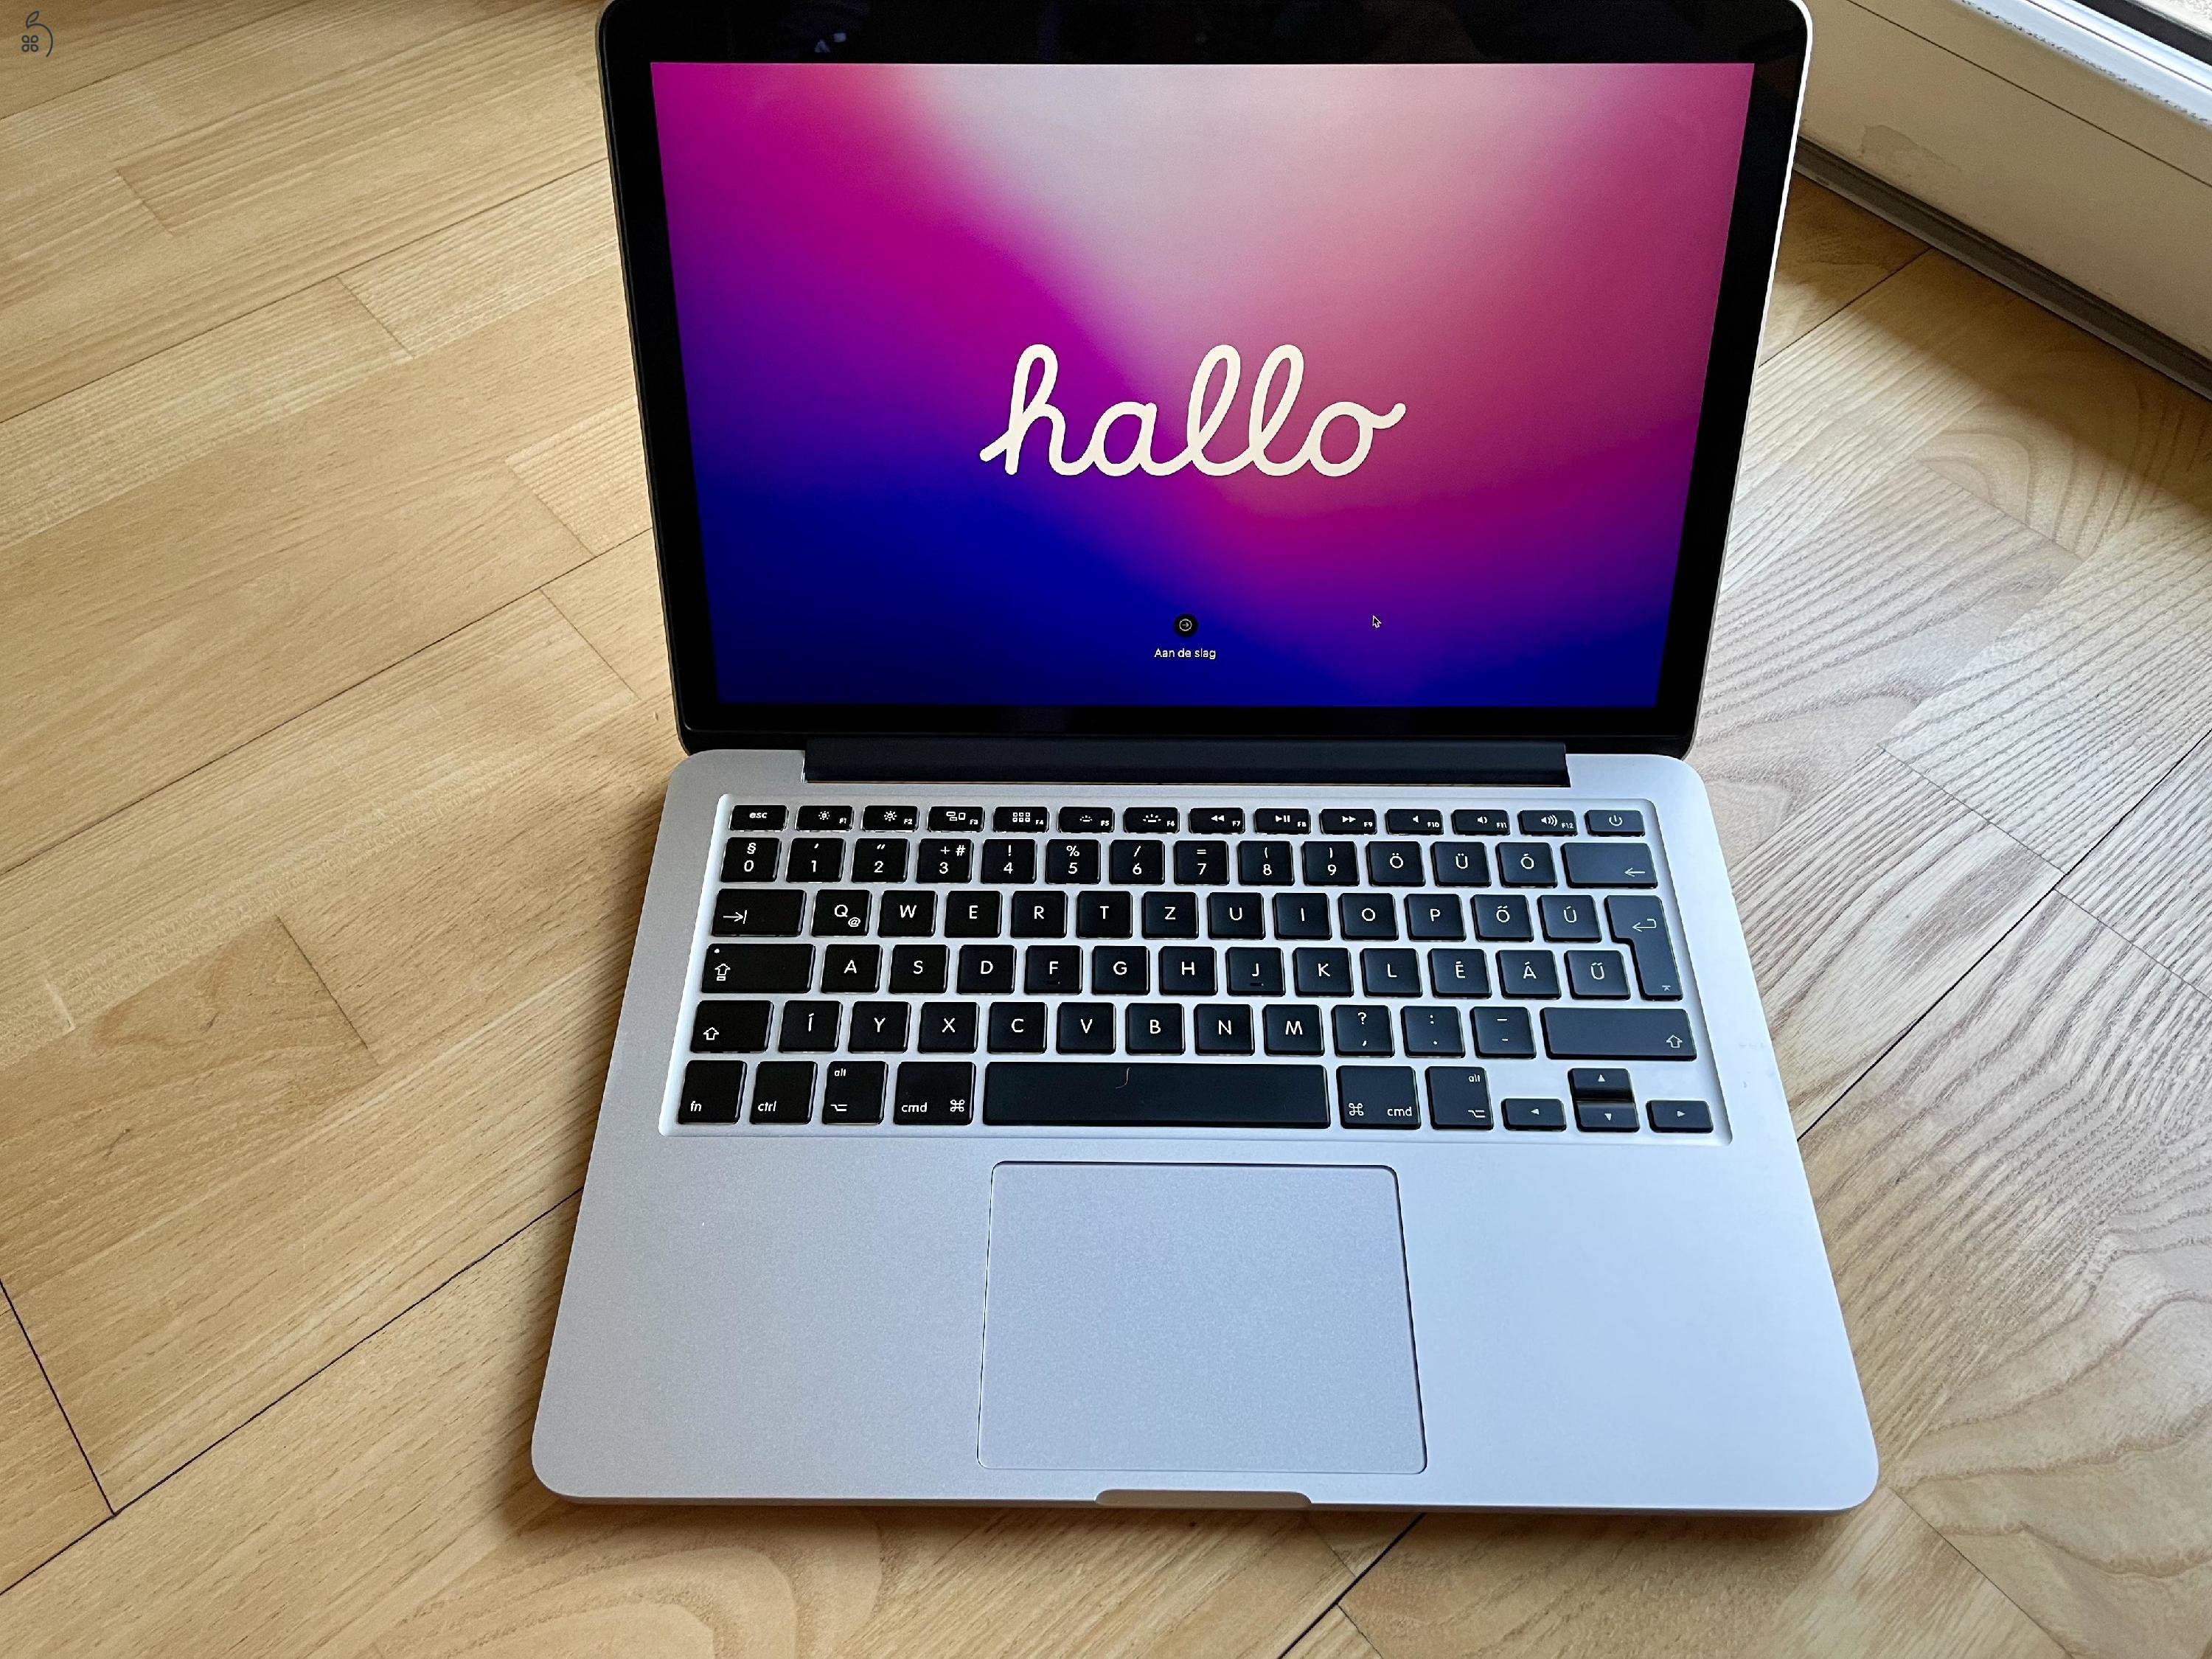 MacBook Pro 13 hüvelykes, nagyteljesítményű notebook Retina-kijelzővel